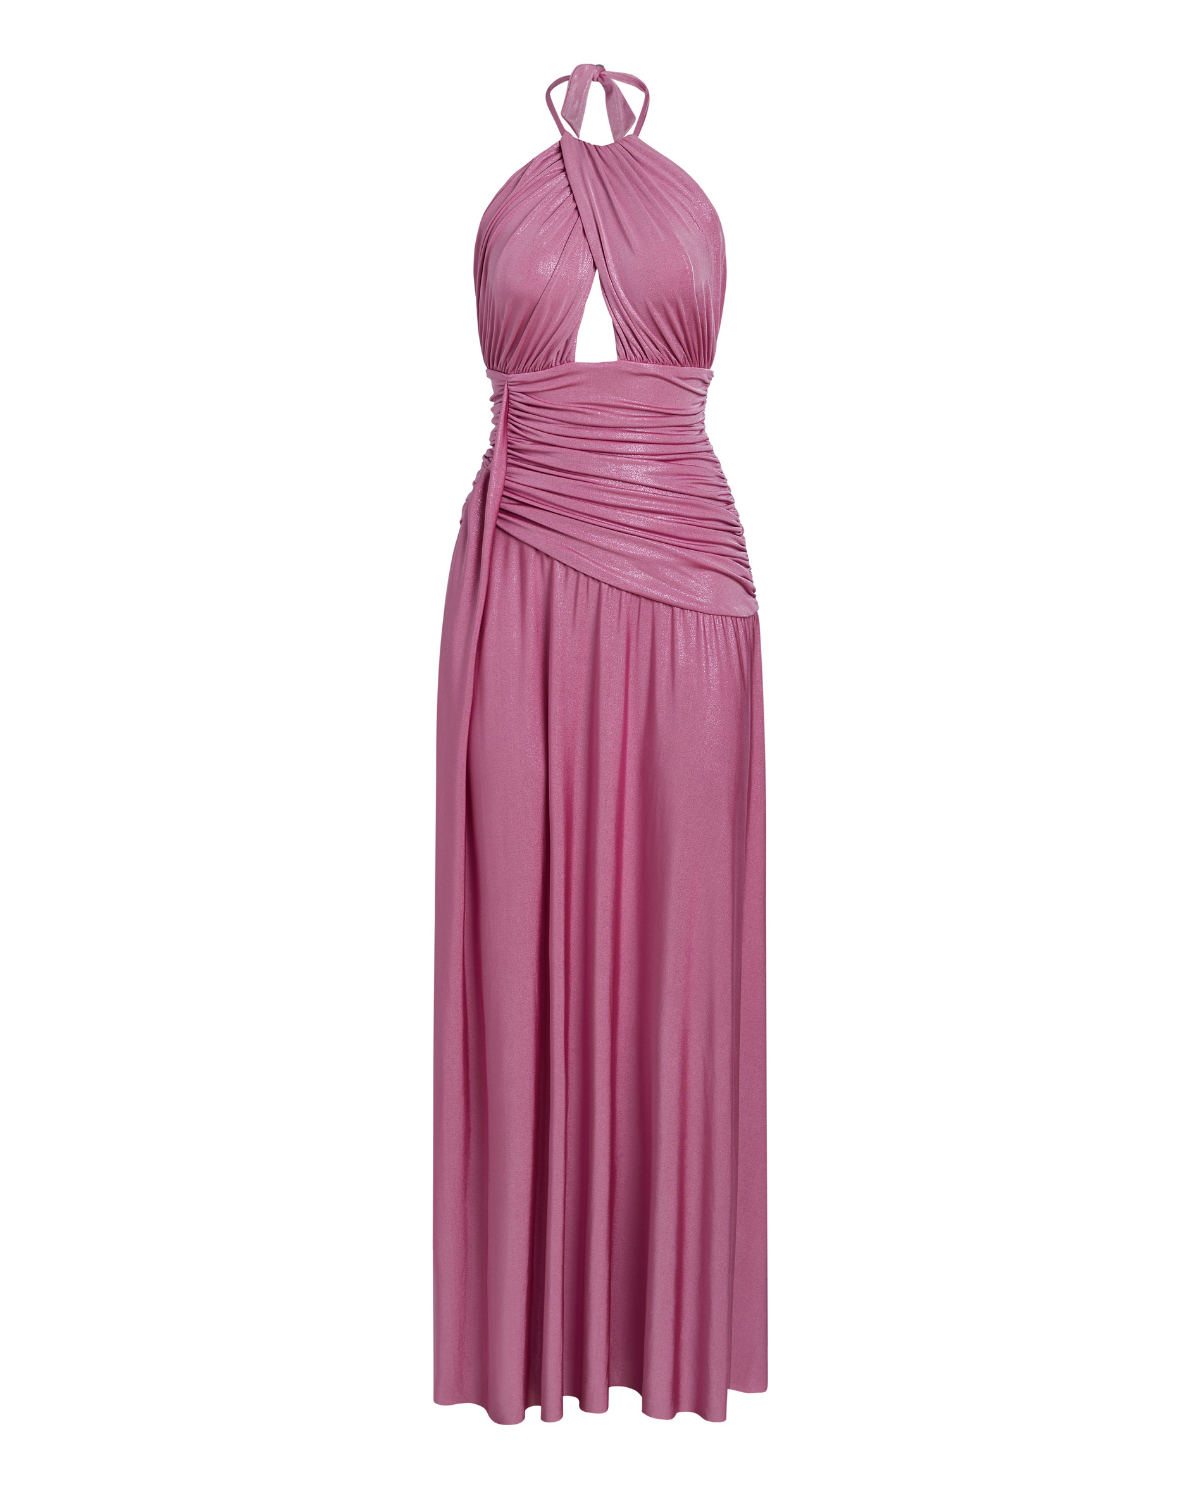 PatBo Metallic Jersey Maxi Dress - Premium Long dress from Marina St Barth - Just $795! Shop now at Marina St Barth